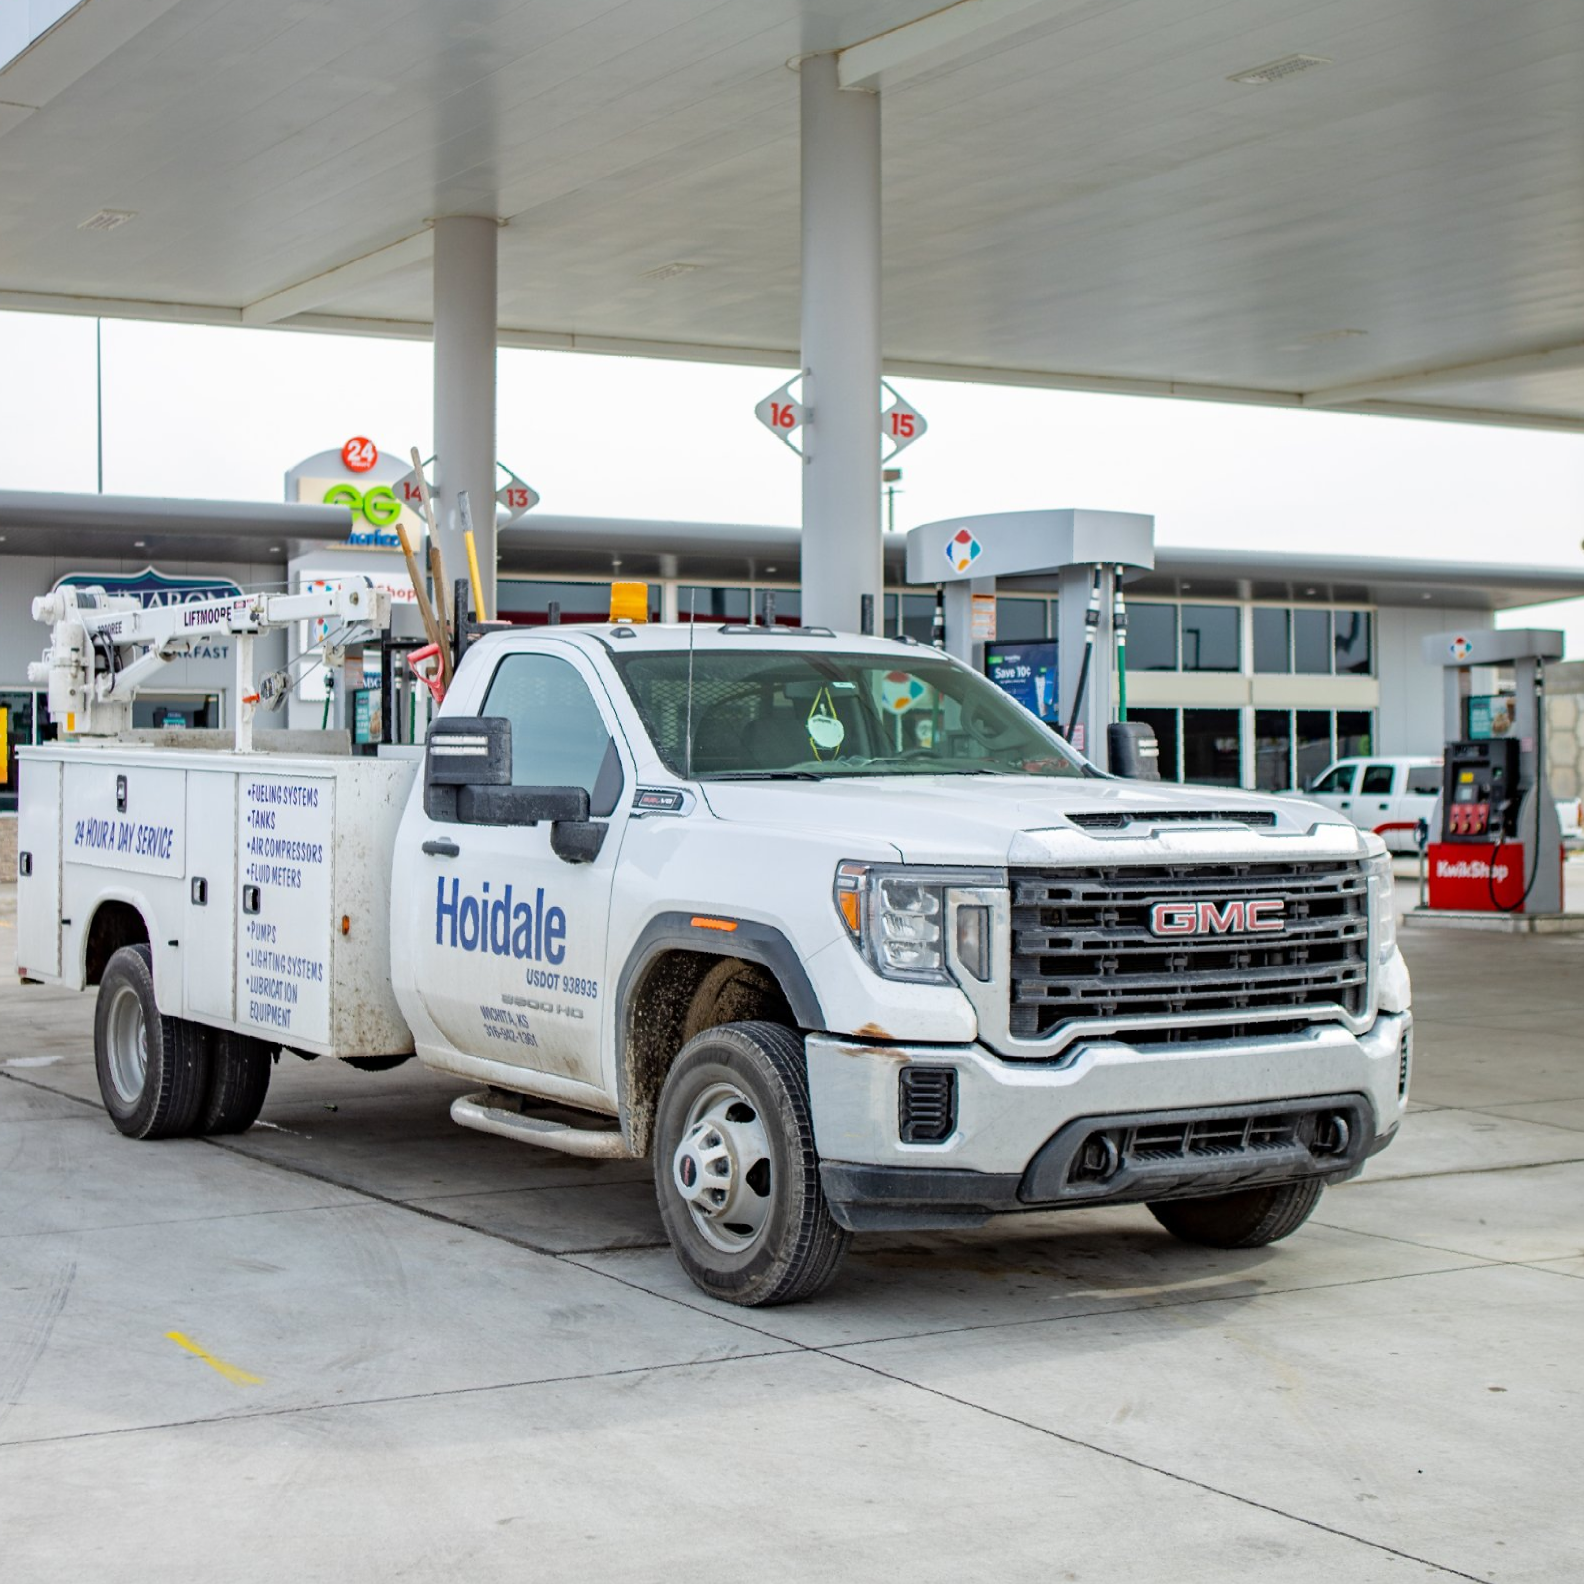 Hoidale Service Truck At Gas Station in Wichita Kansas